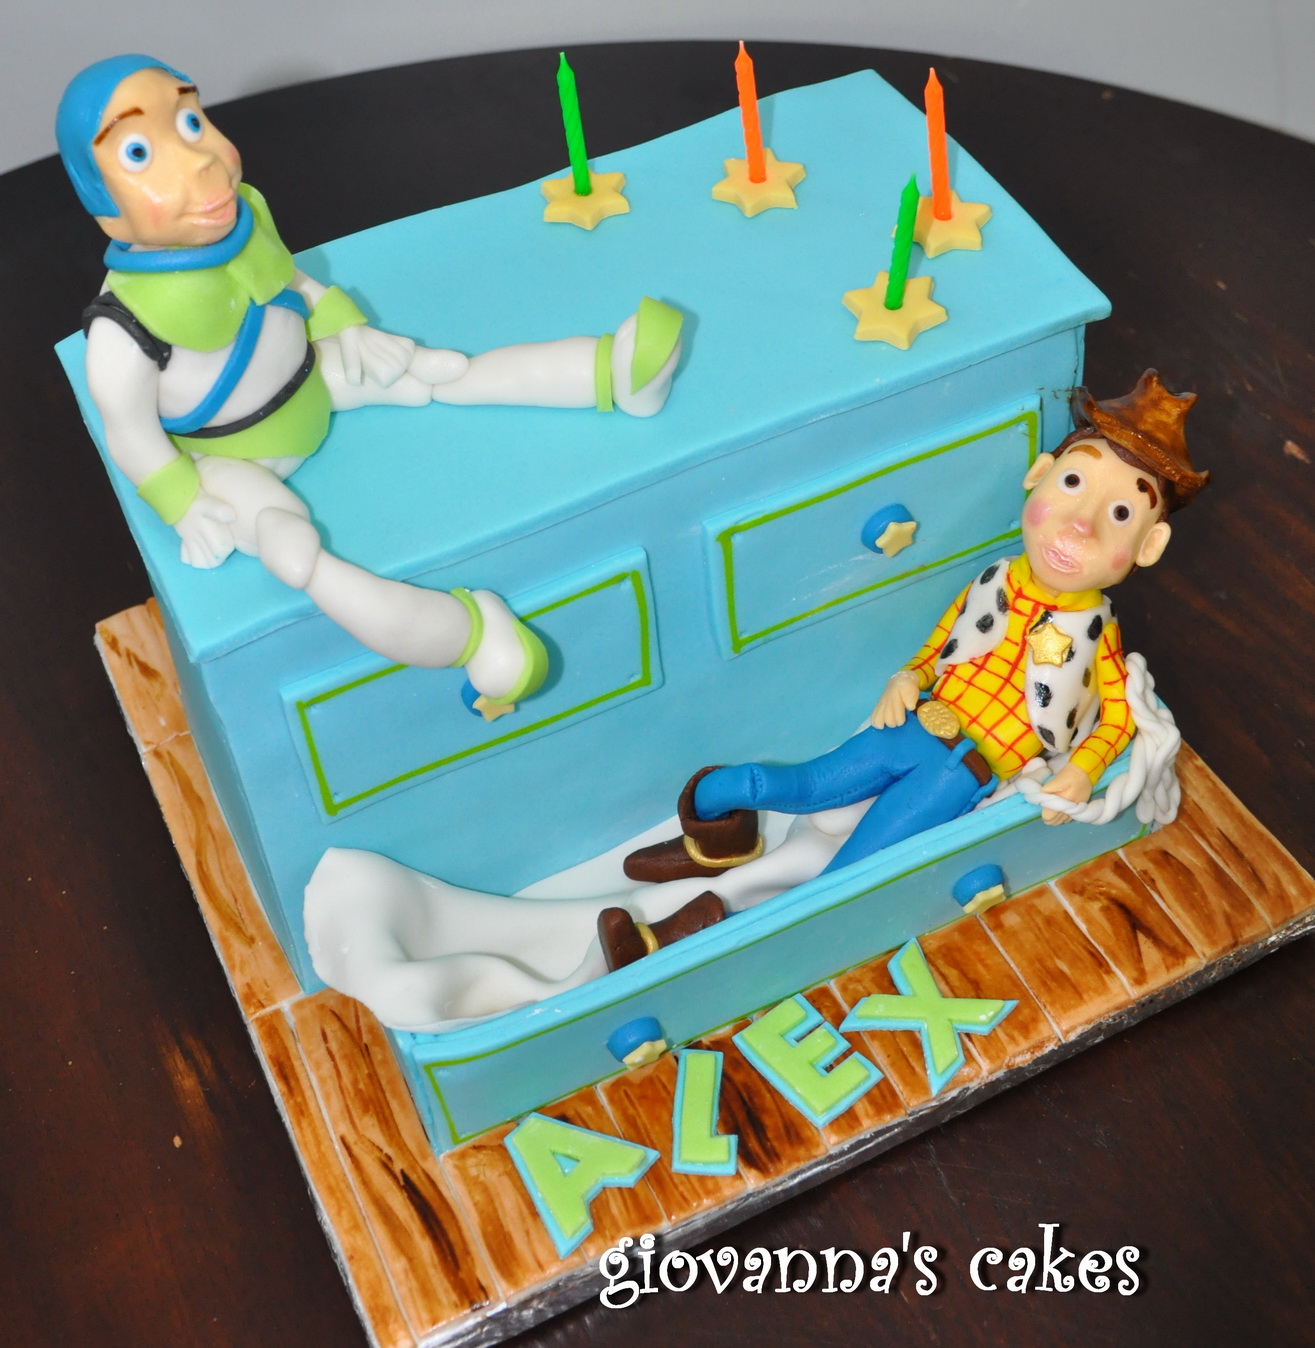 Giovannas Cakes Toy Story Themed Cake 